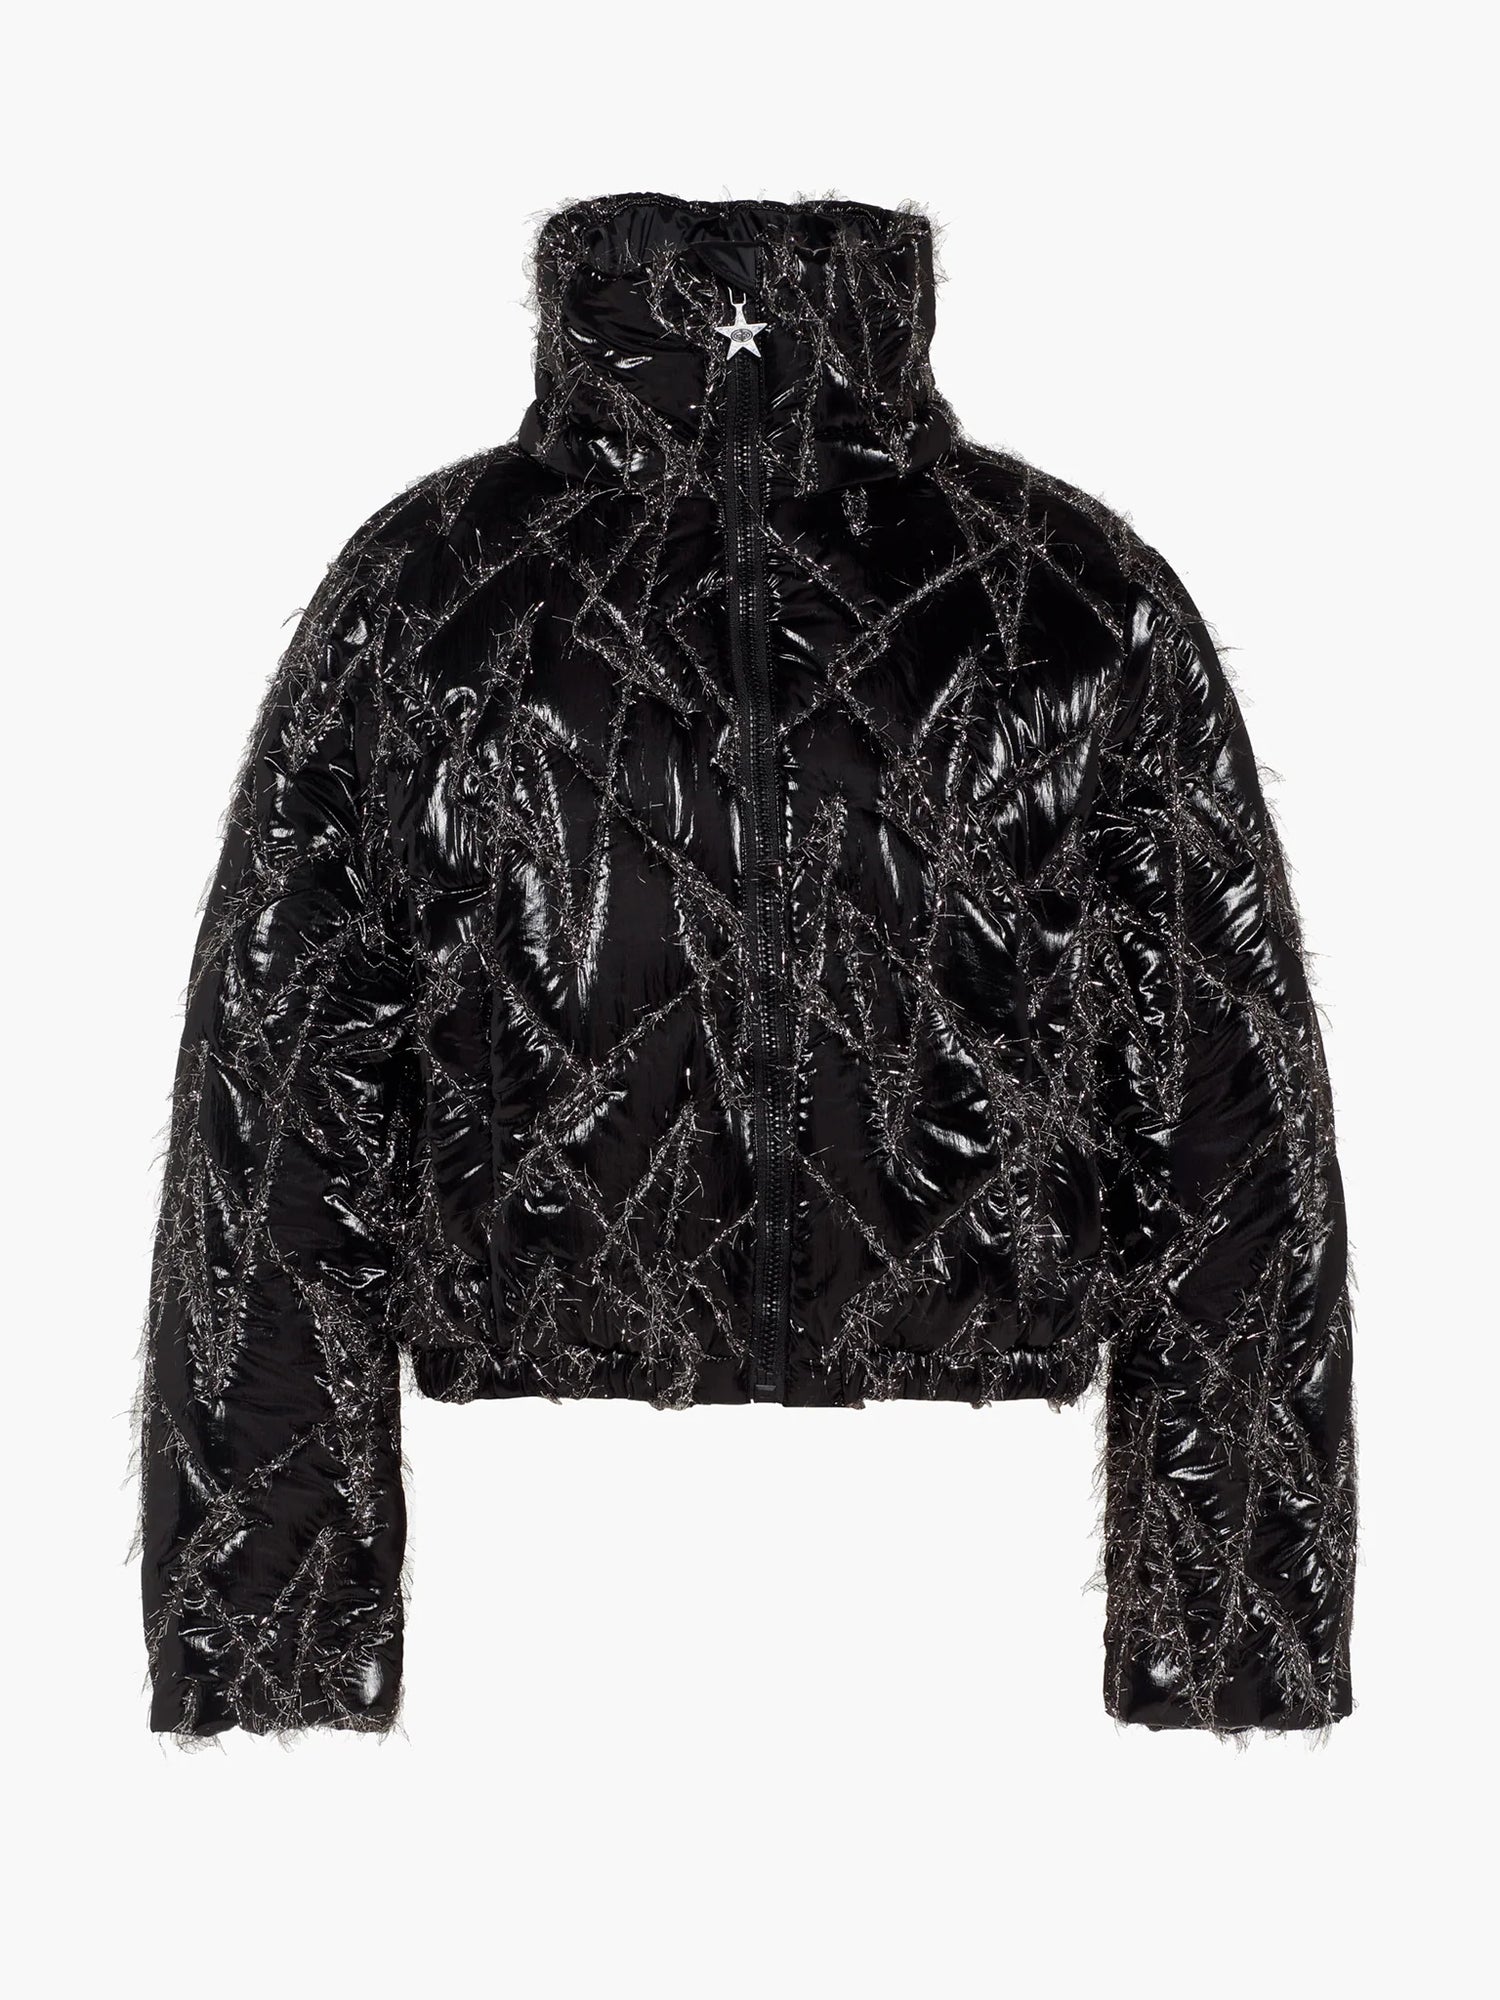 STARRYSKY ski jacket, black